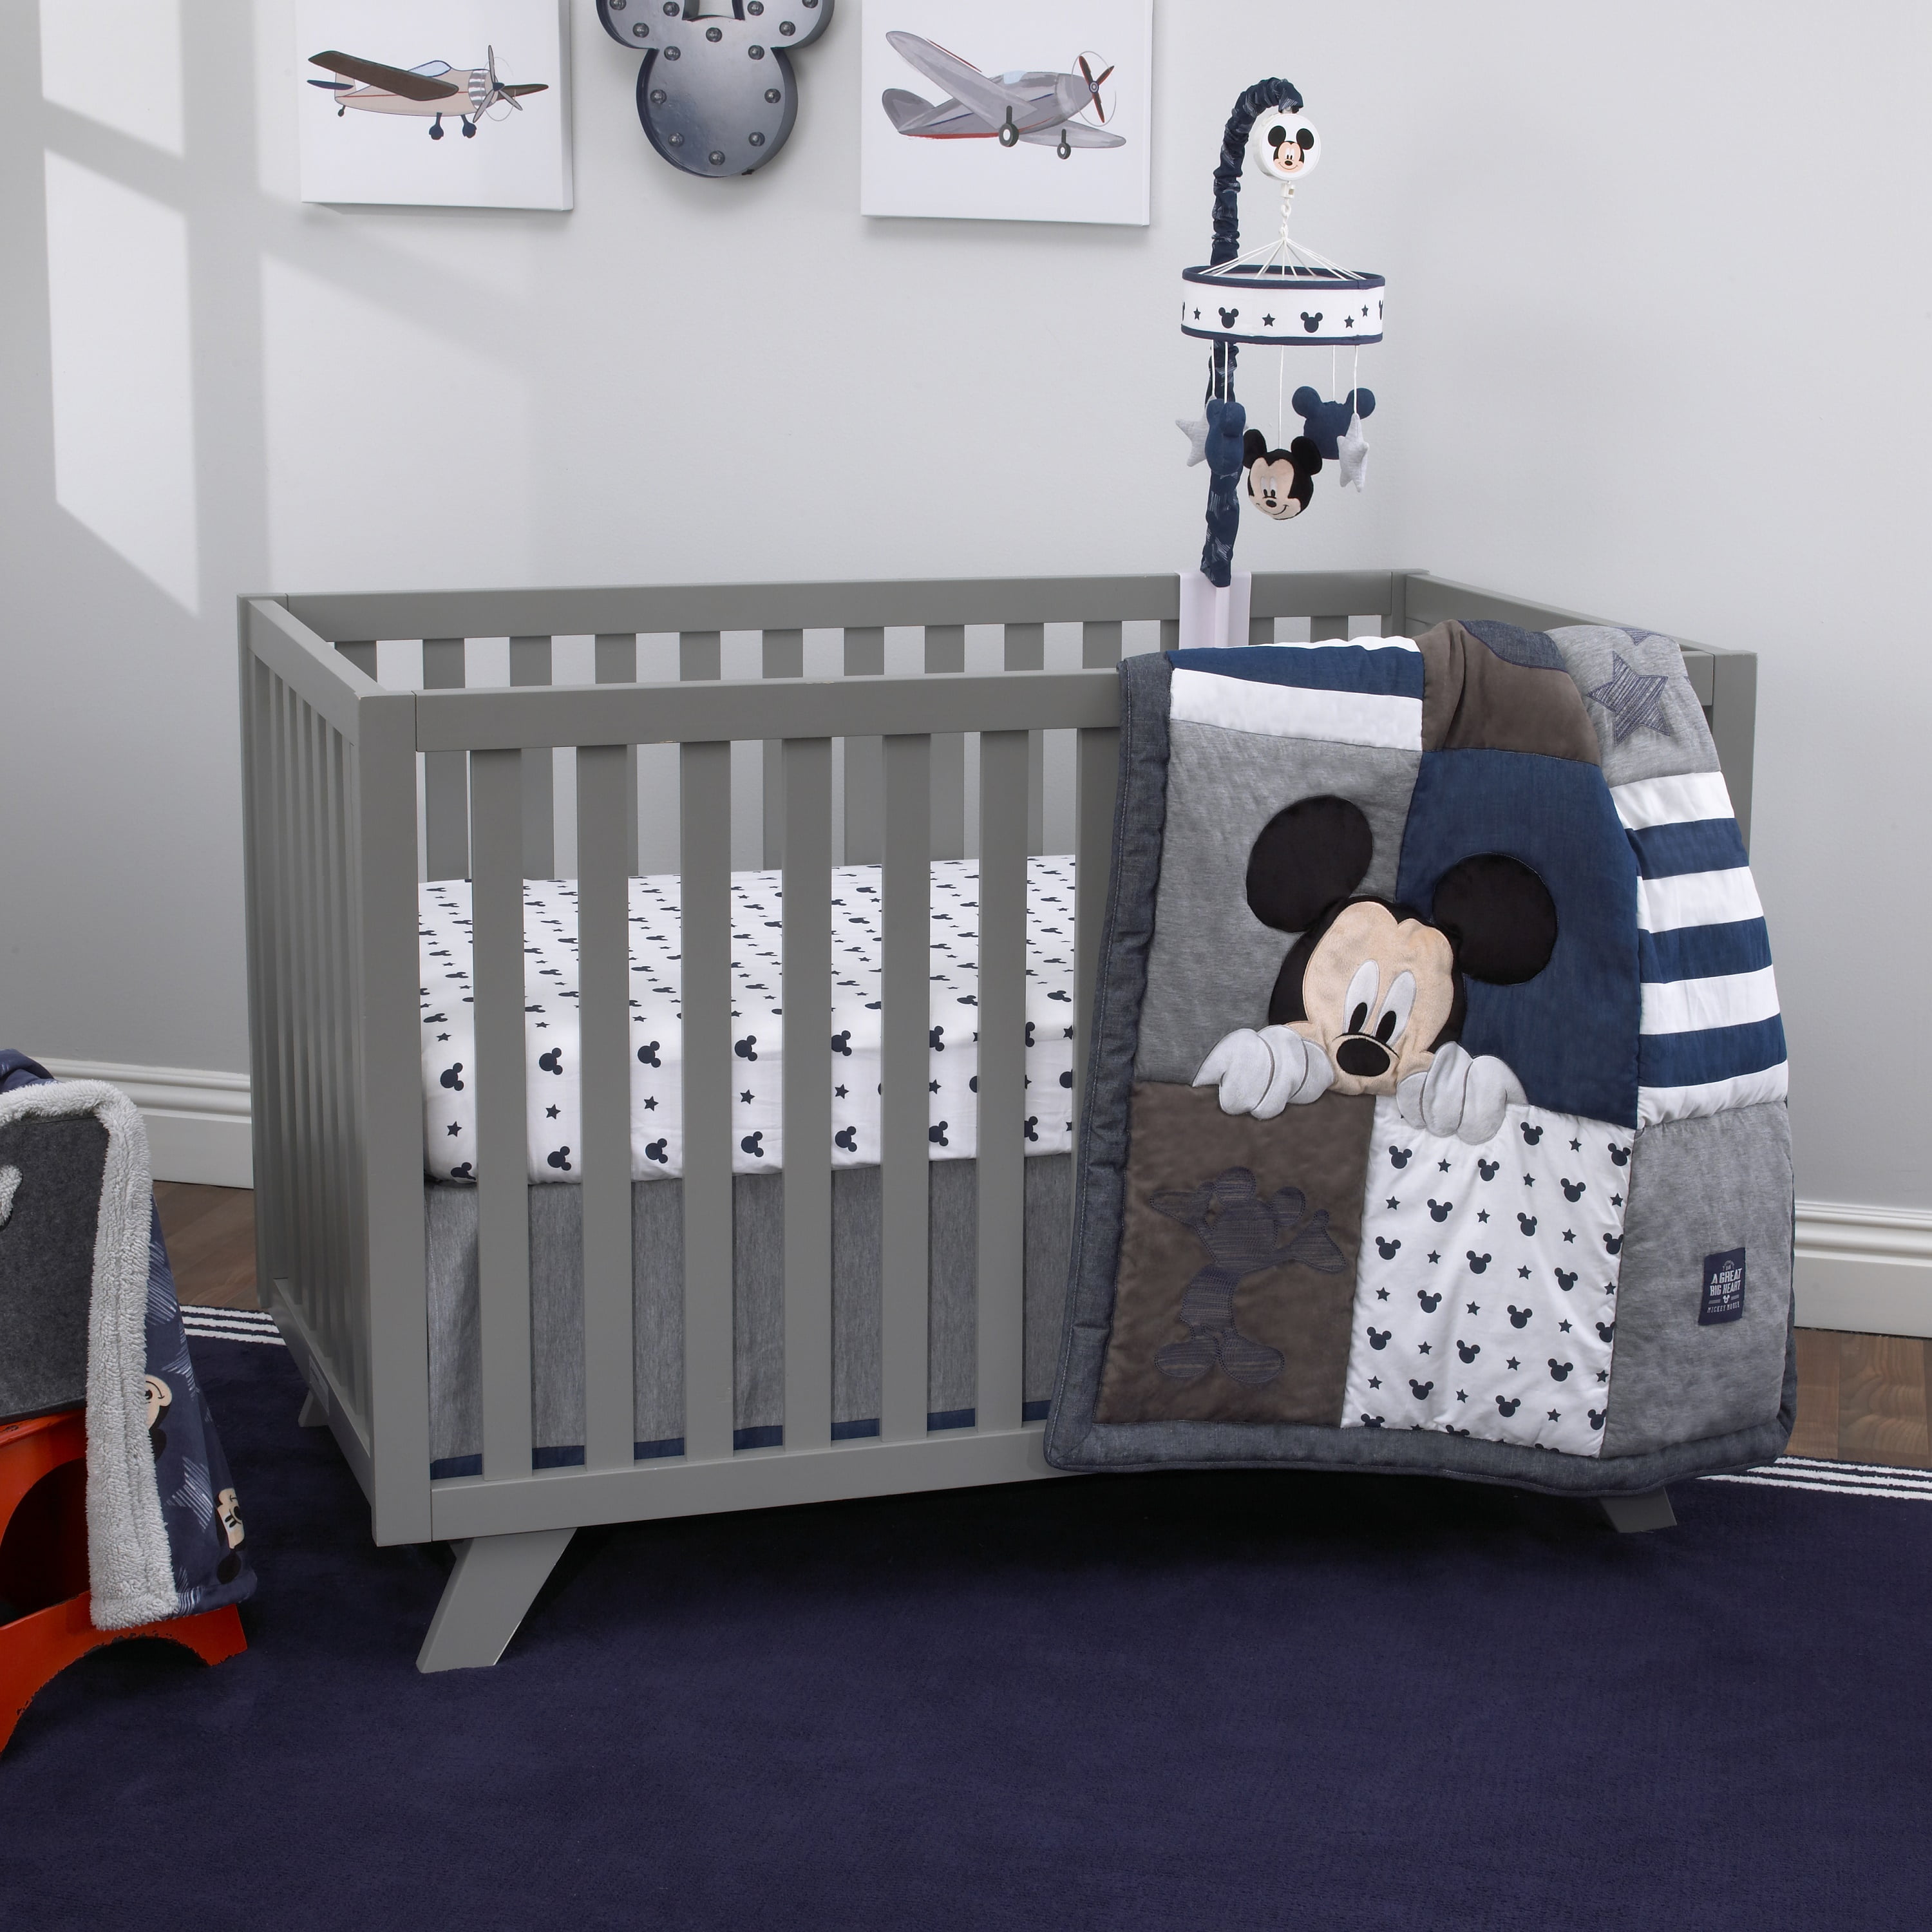 Disney Mickey Mouse bedding set to fit swinging/rocking crib 38 x 89cm 